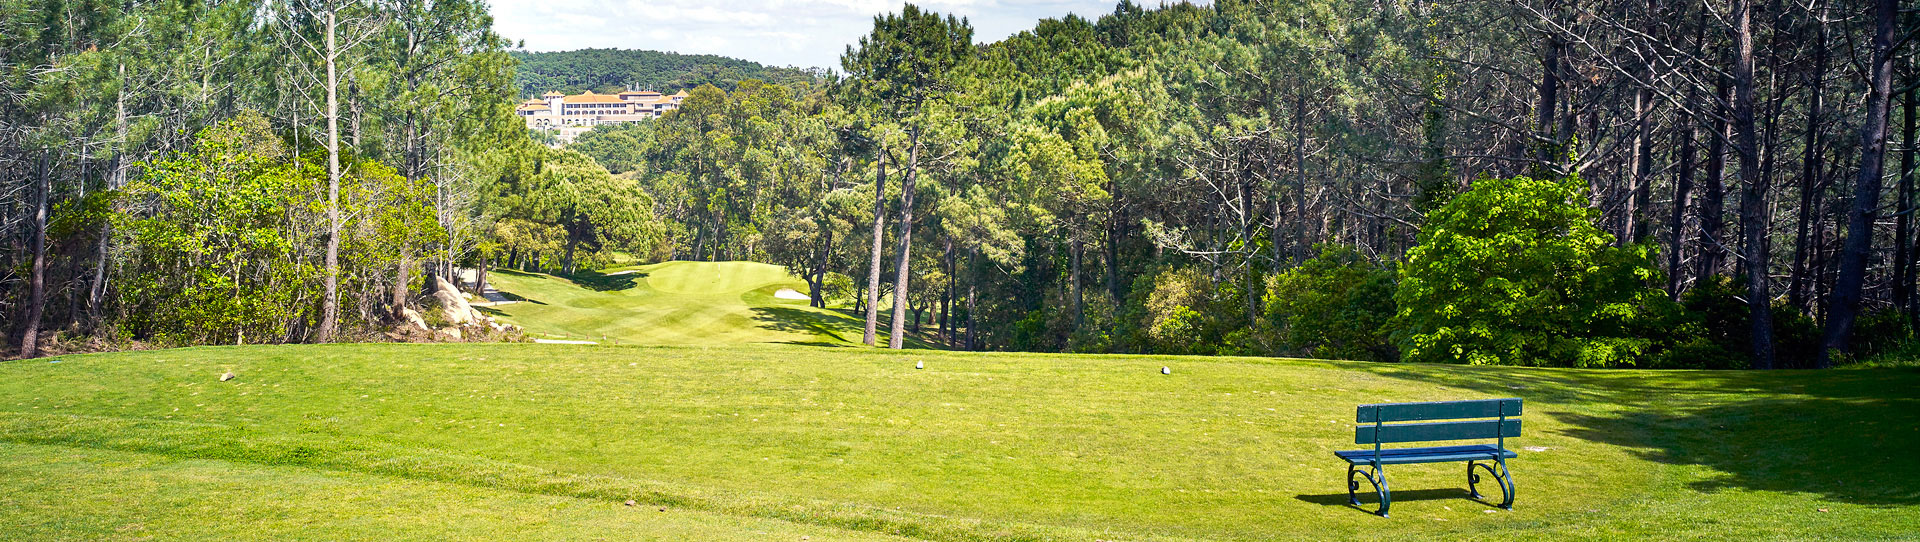 Portugal golf holidays - Penha Longa 3 + 1 Free Round - Photo 3